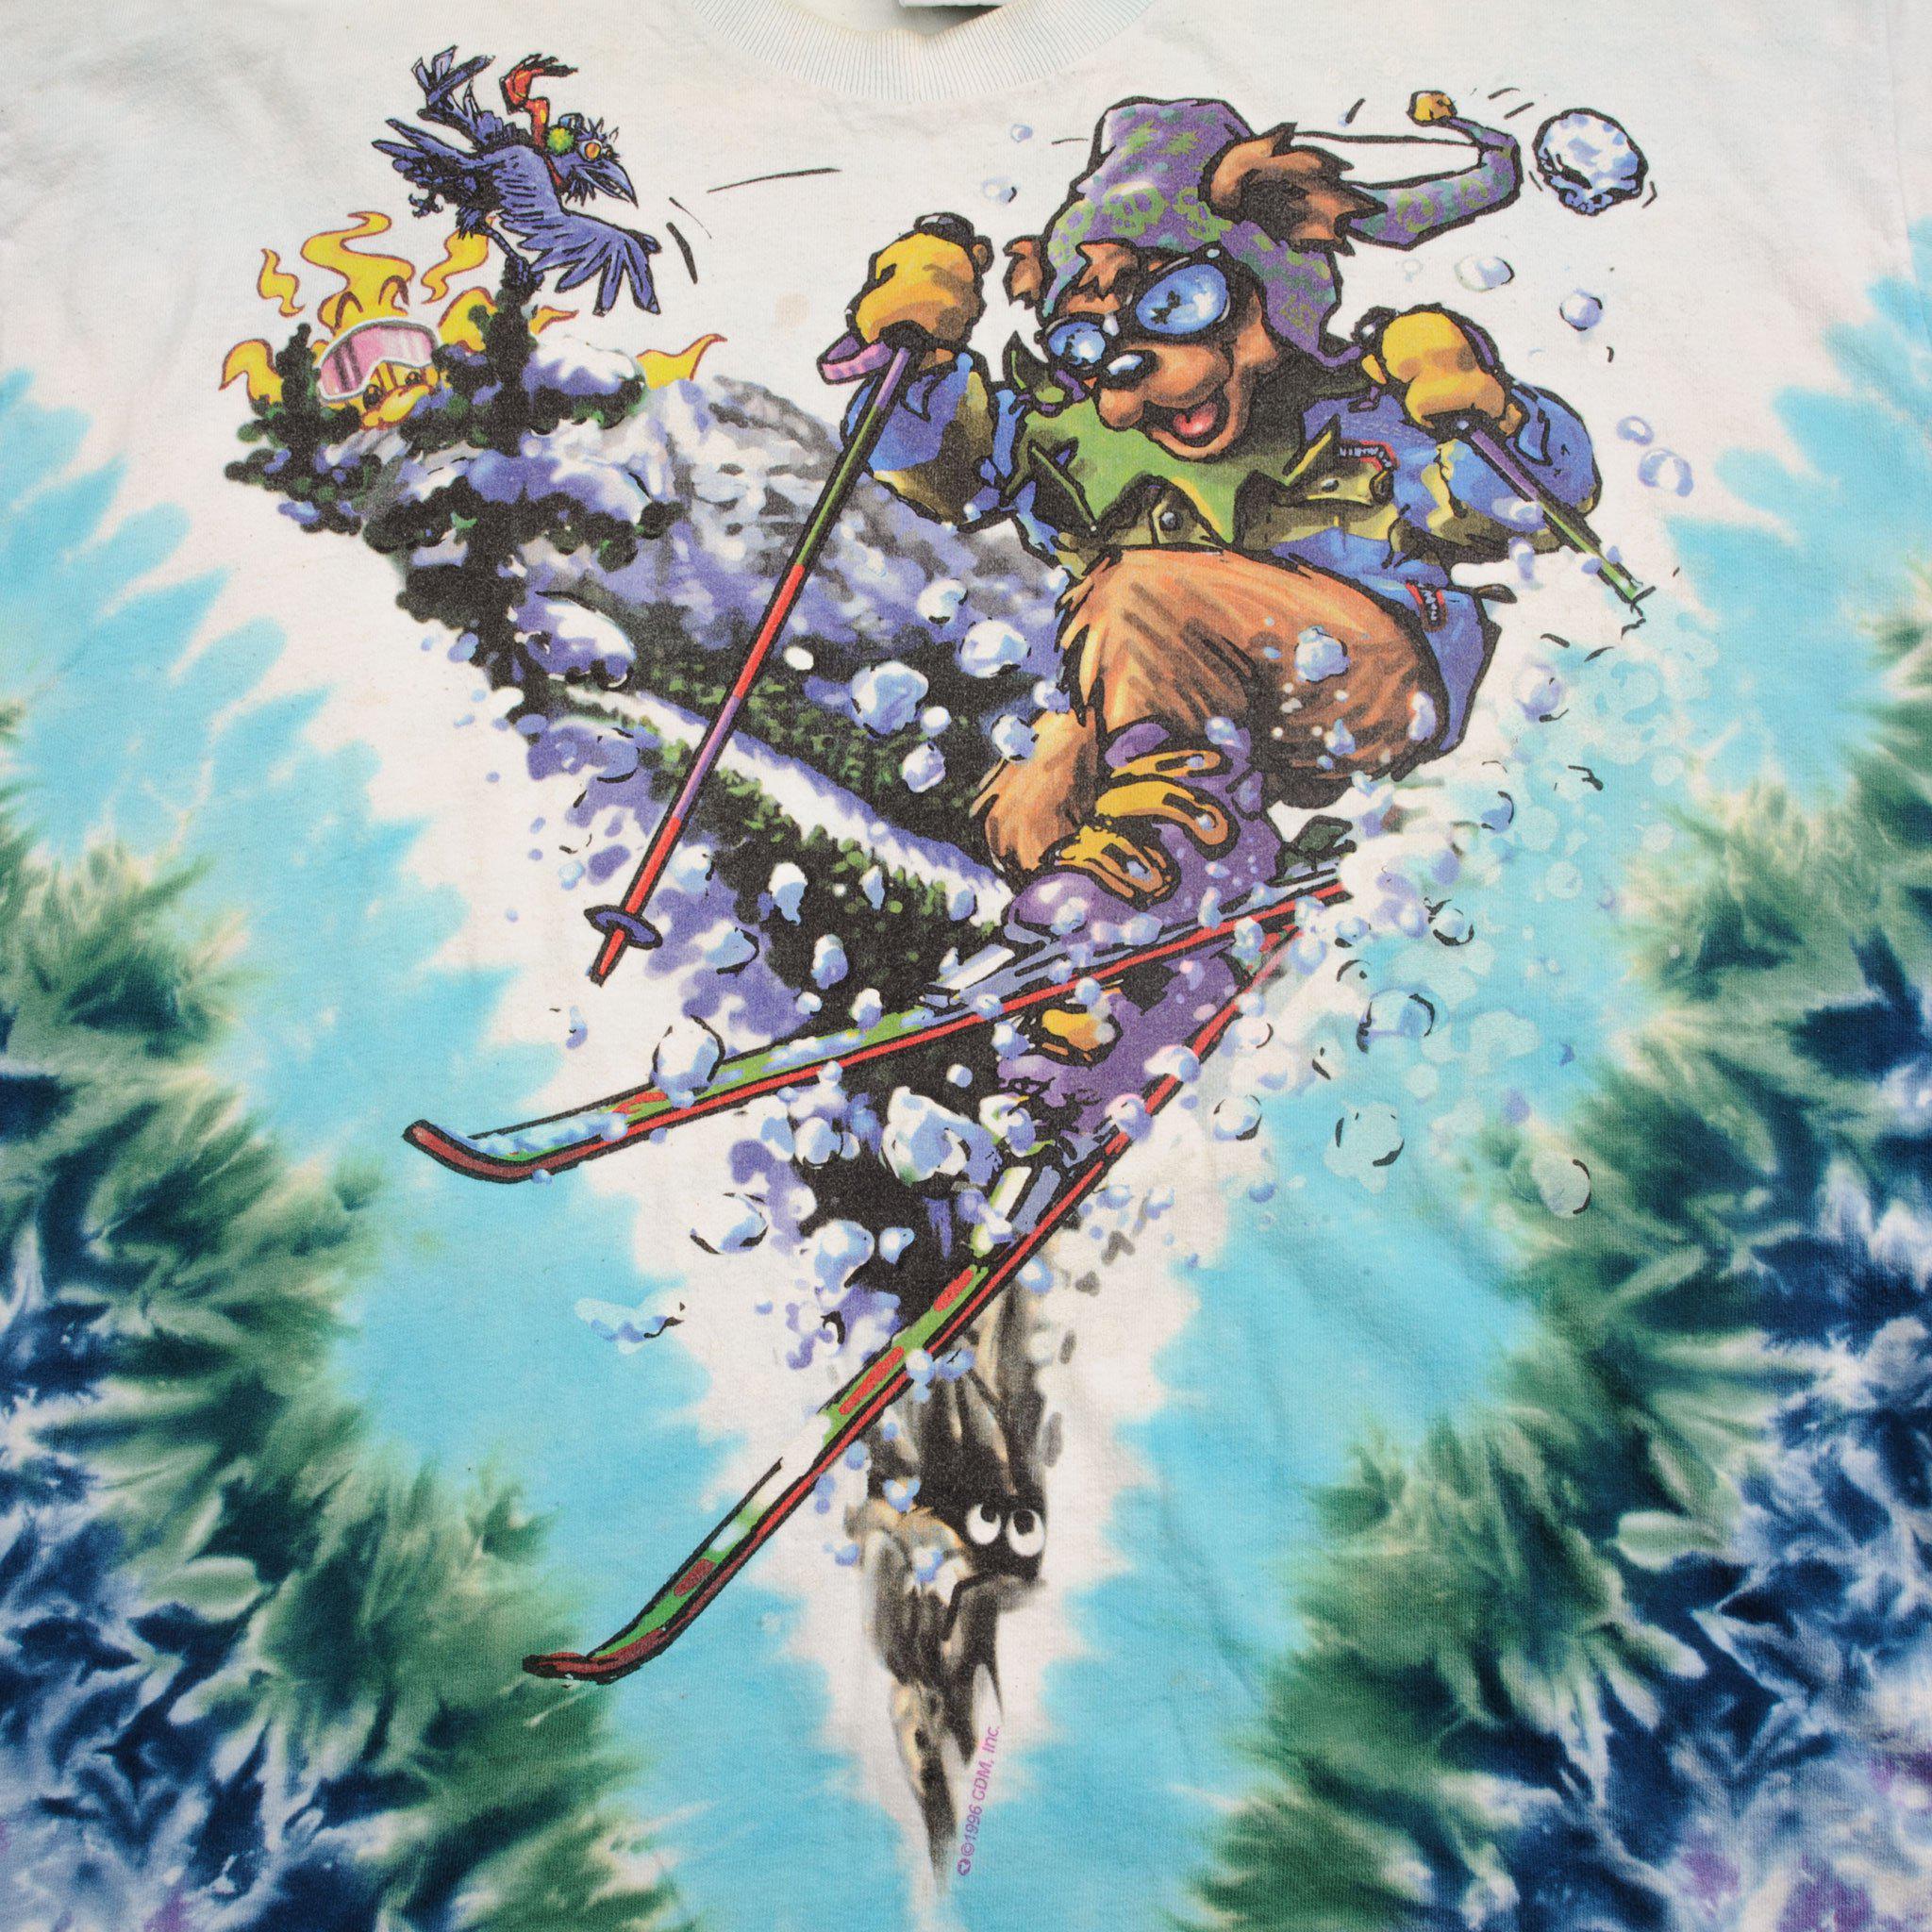 Music Vintage Tie Dye Grateful Dead Tee Shirt by Liquid Blue 1996 Size XL Made in USA